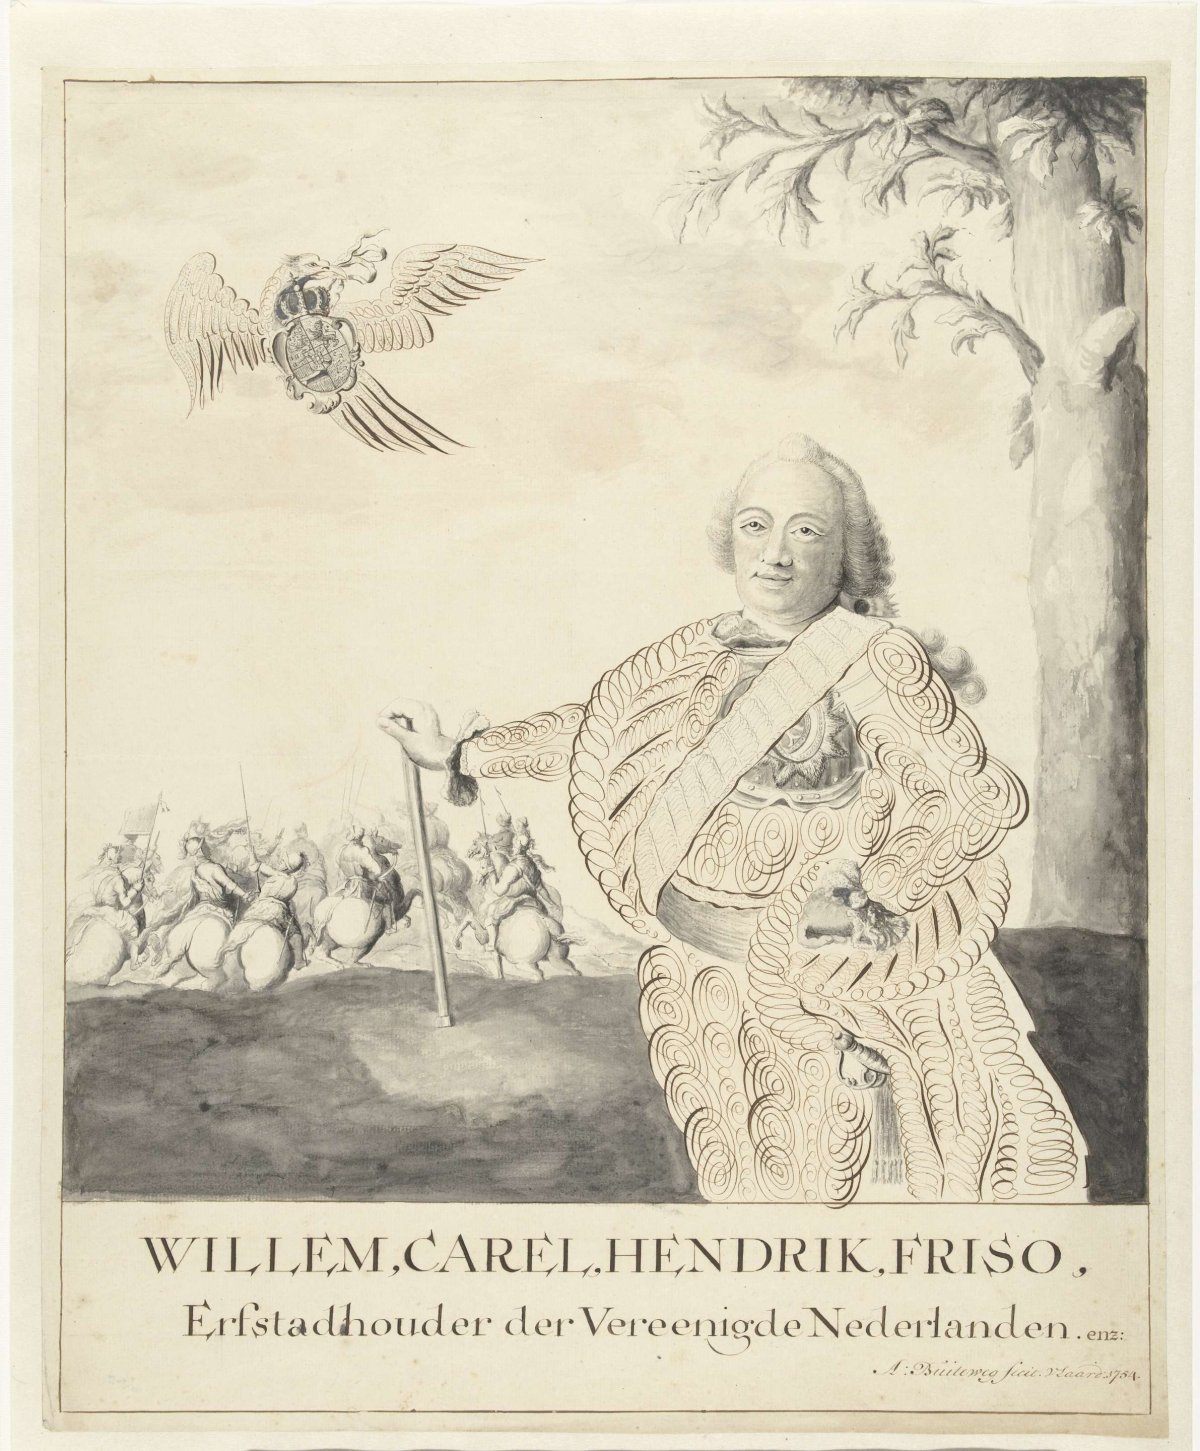 Portrait of William IV, Prince of Orange-Nassau, A. Buiteweg, 1754